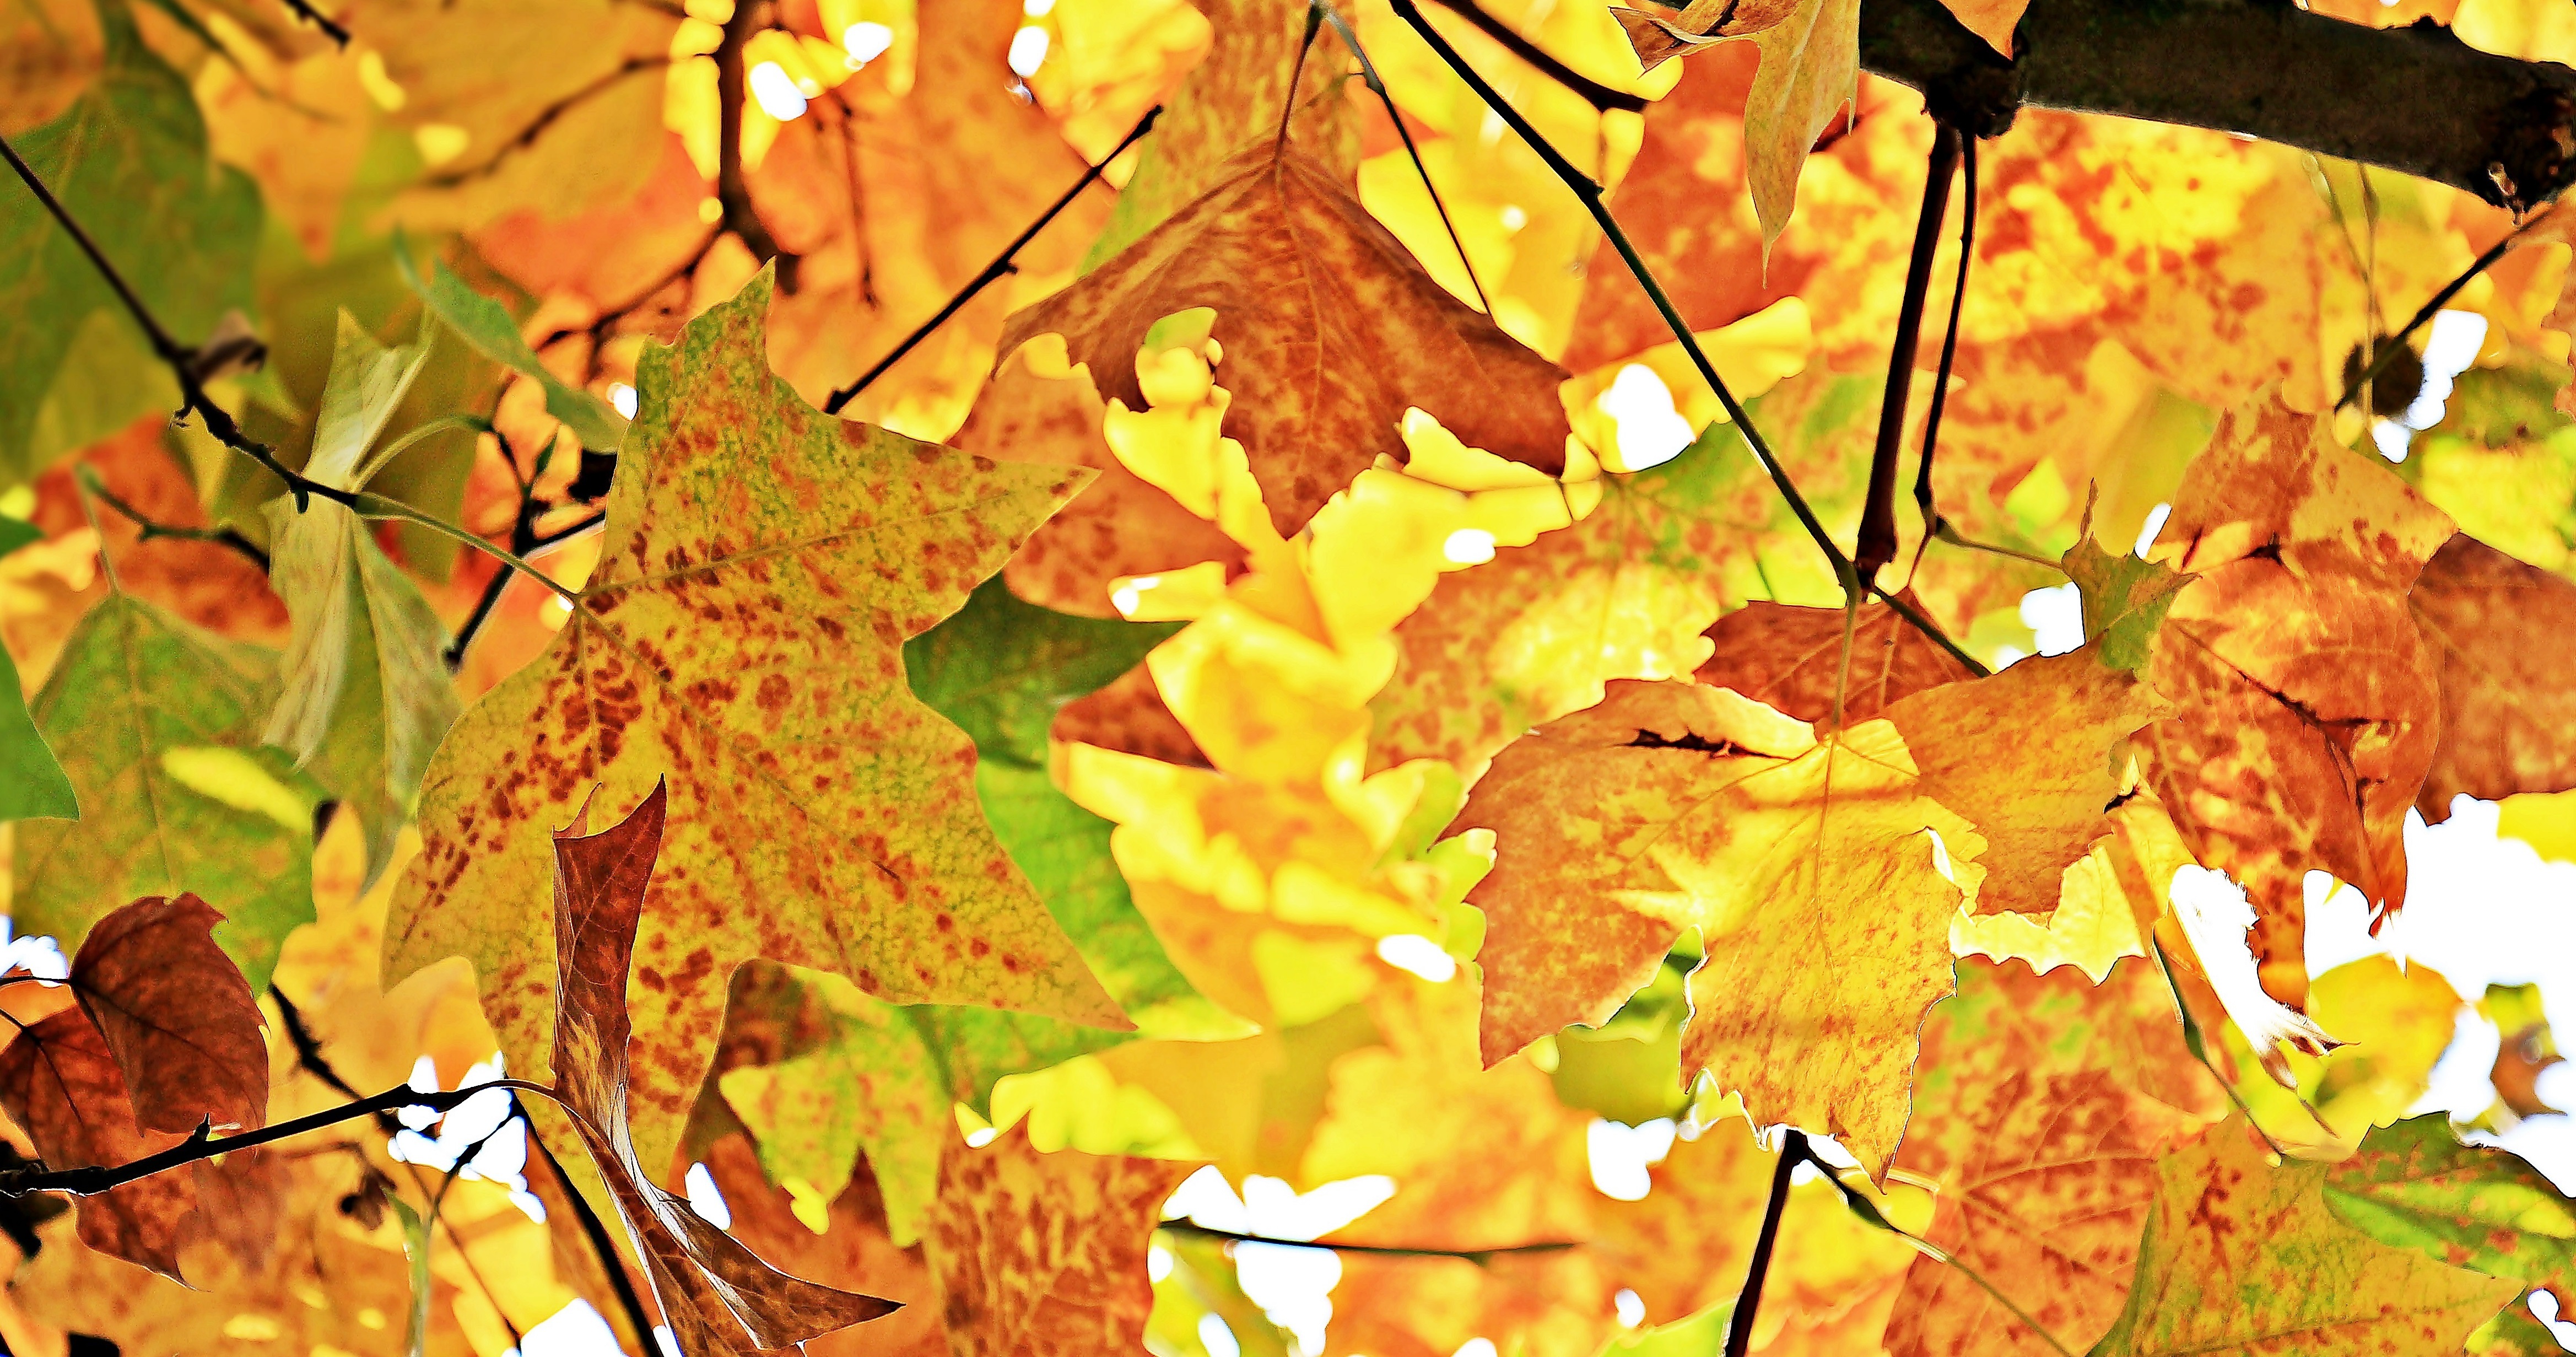 Wallpapers terrestrial plant autumn colours sun light on the desktop